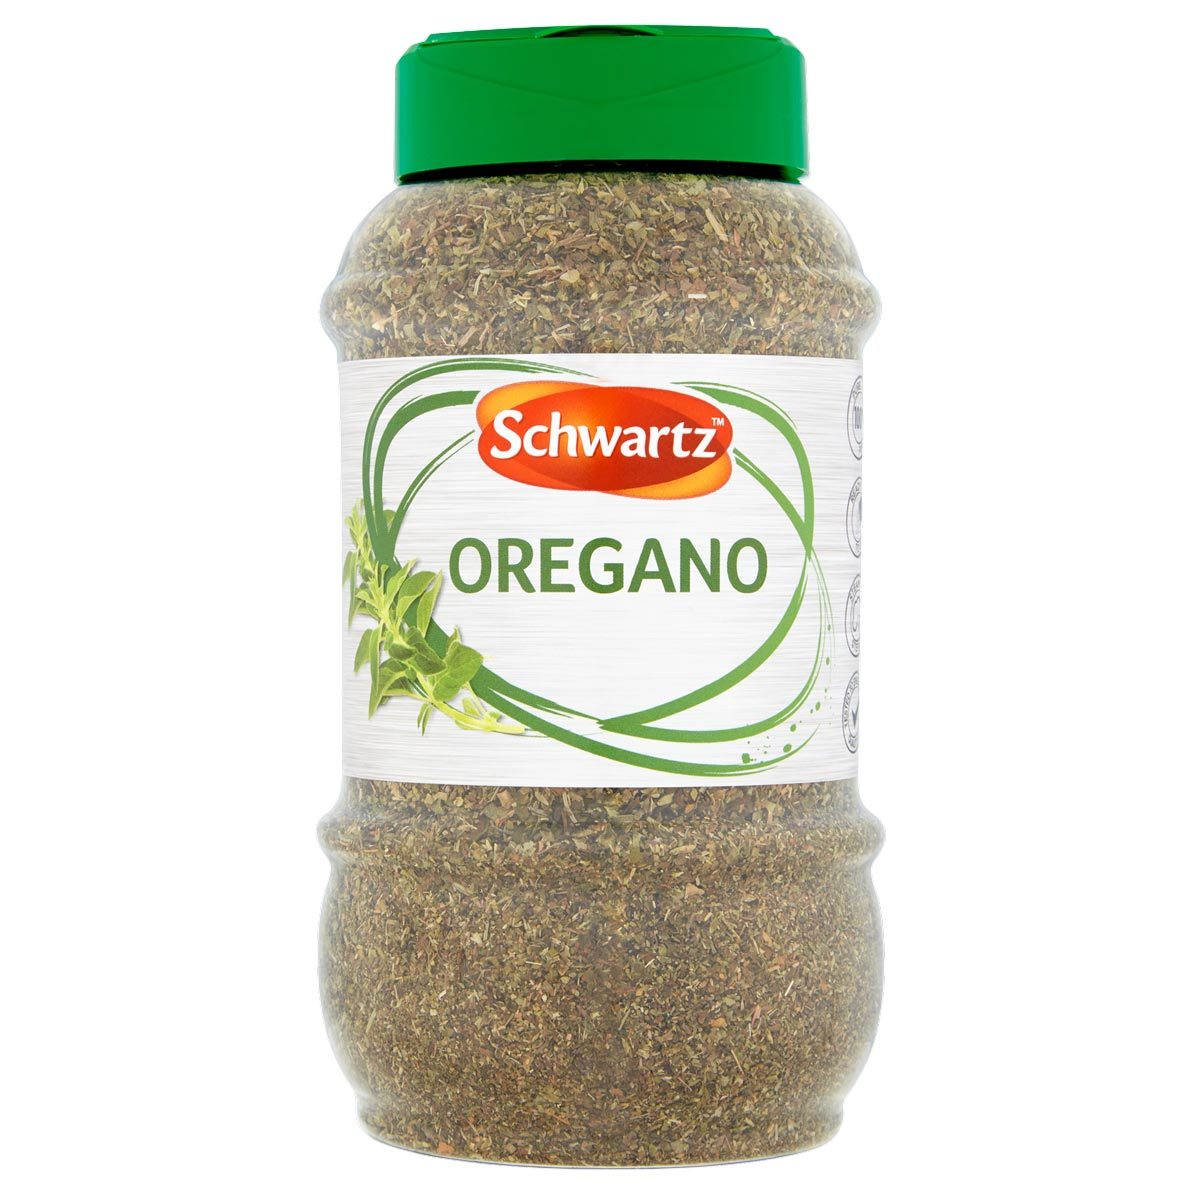 Schwartz Oregano, 120g Spices Costco UK   